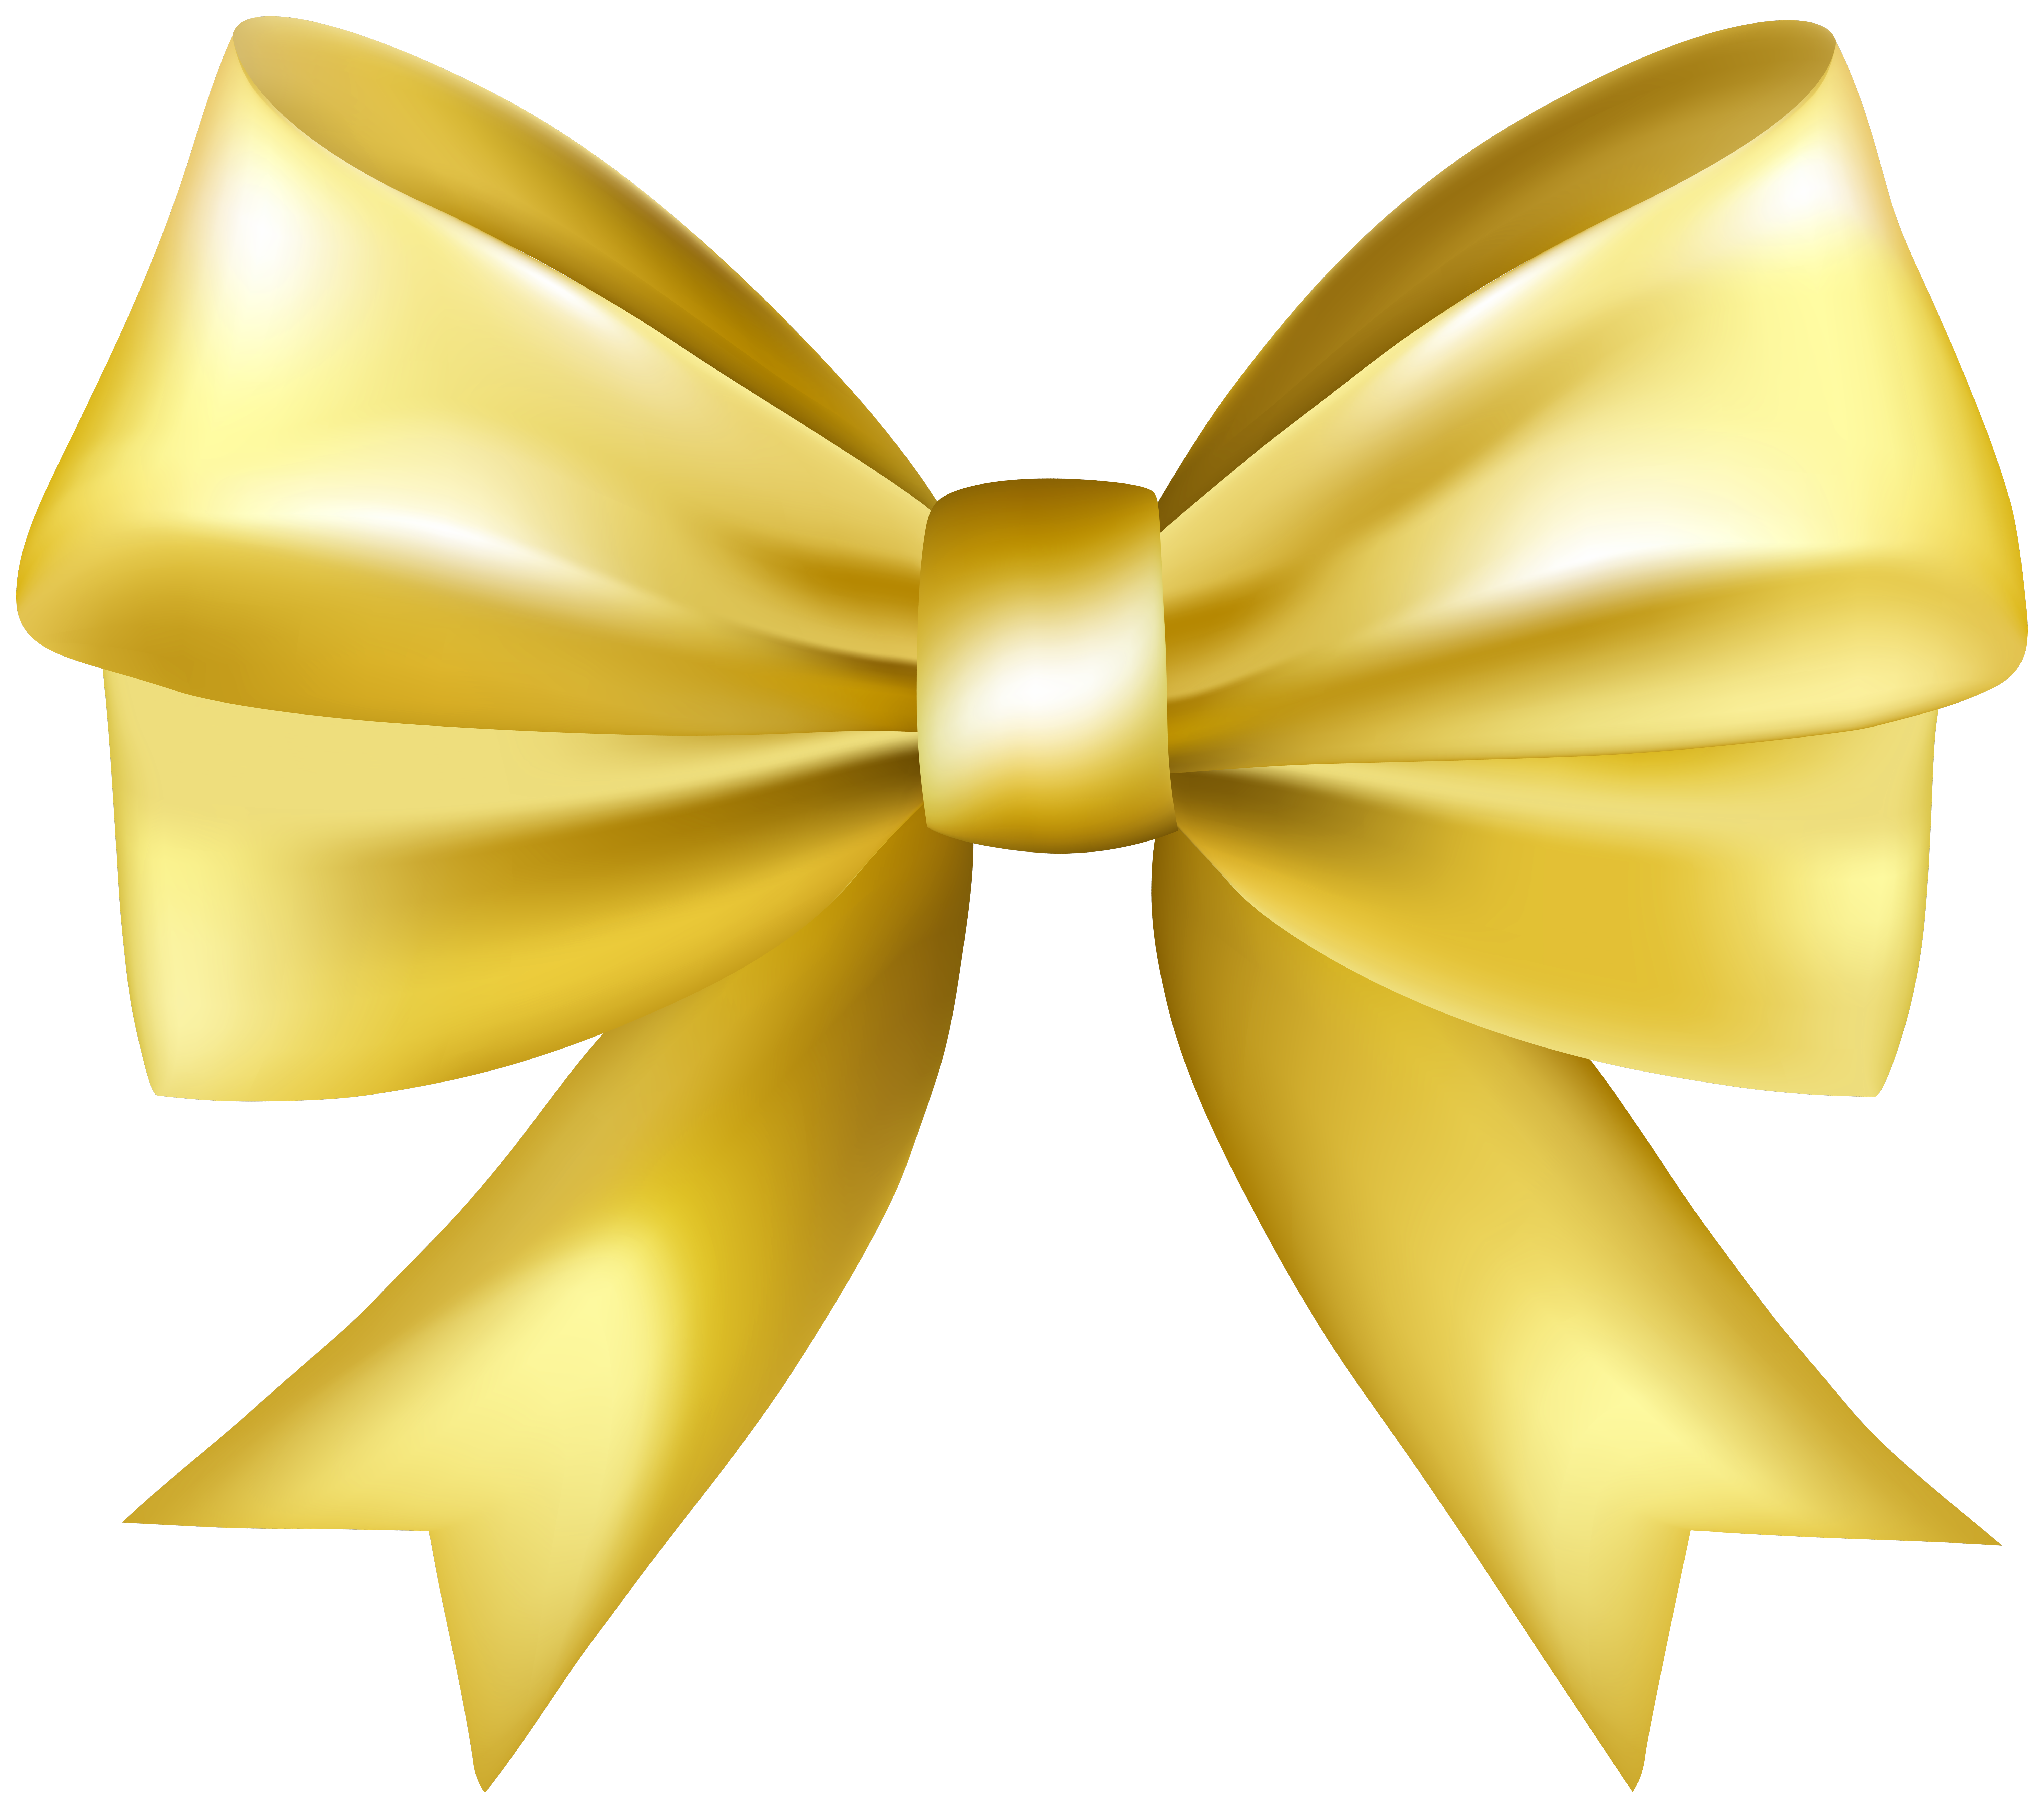 yellow bow tie clip art